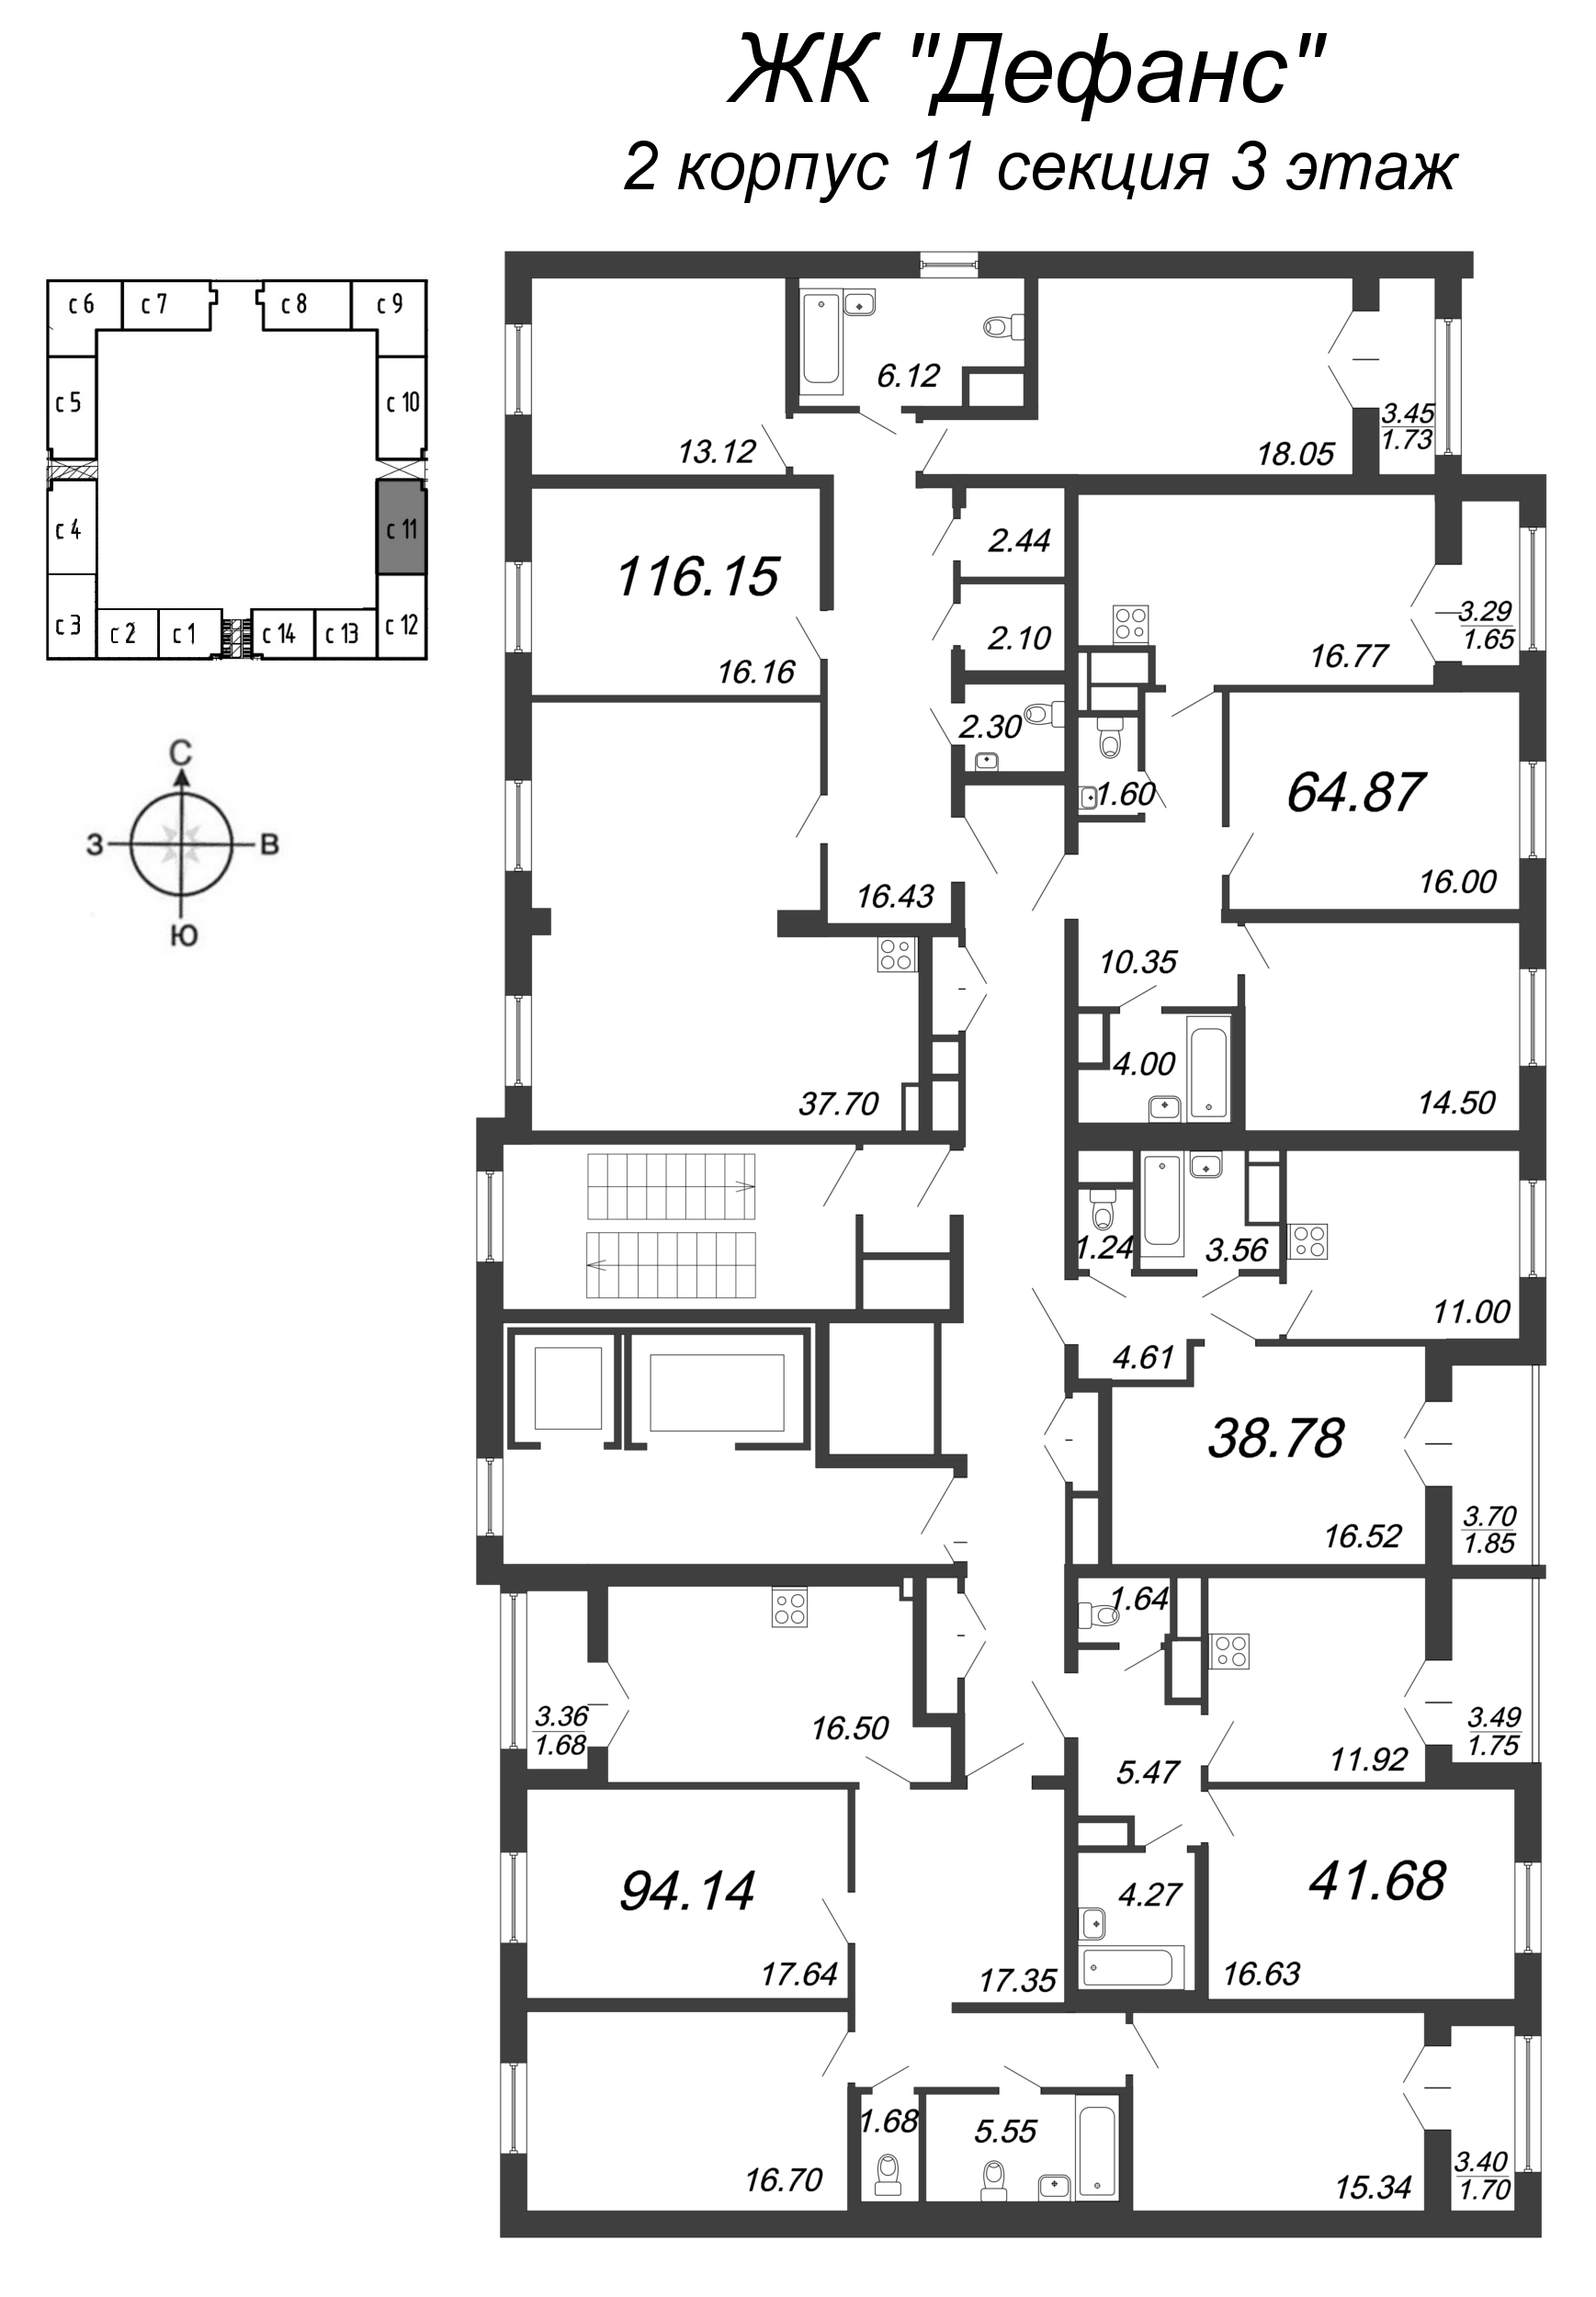 4-комнатная (Евро) квартира, 116.15 м² - планировка этажа